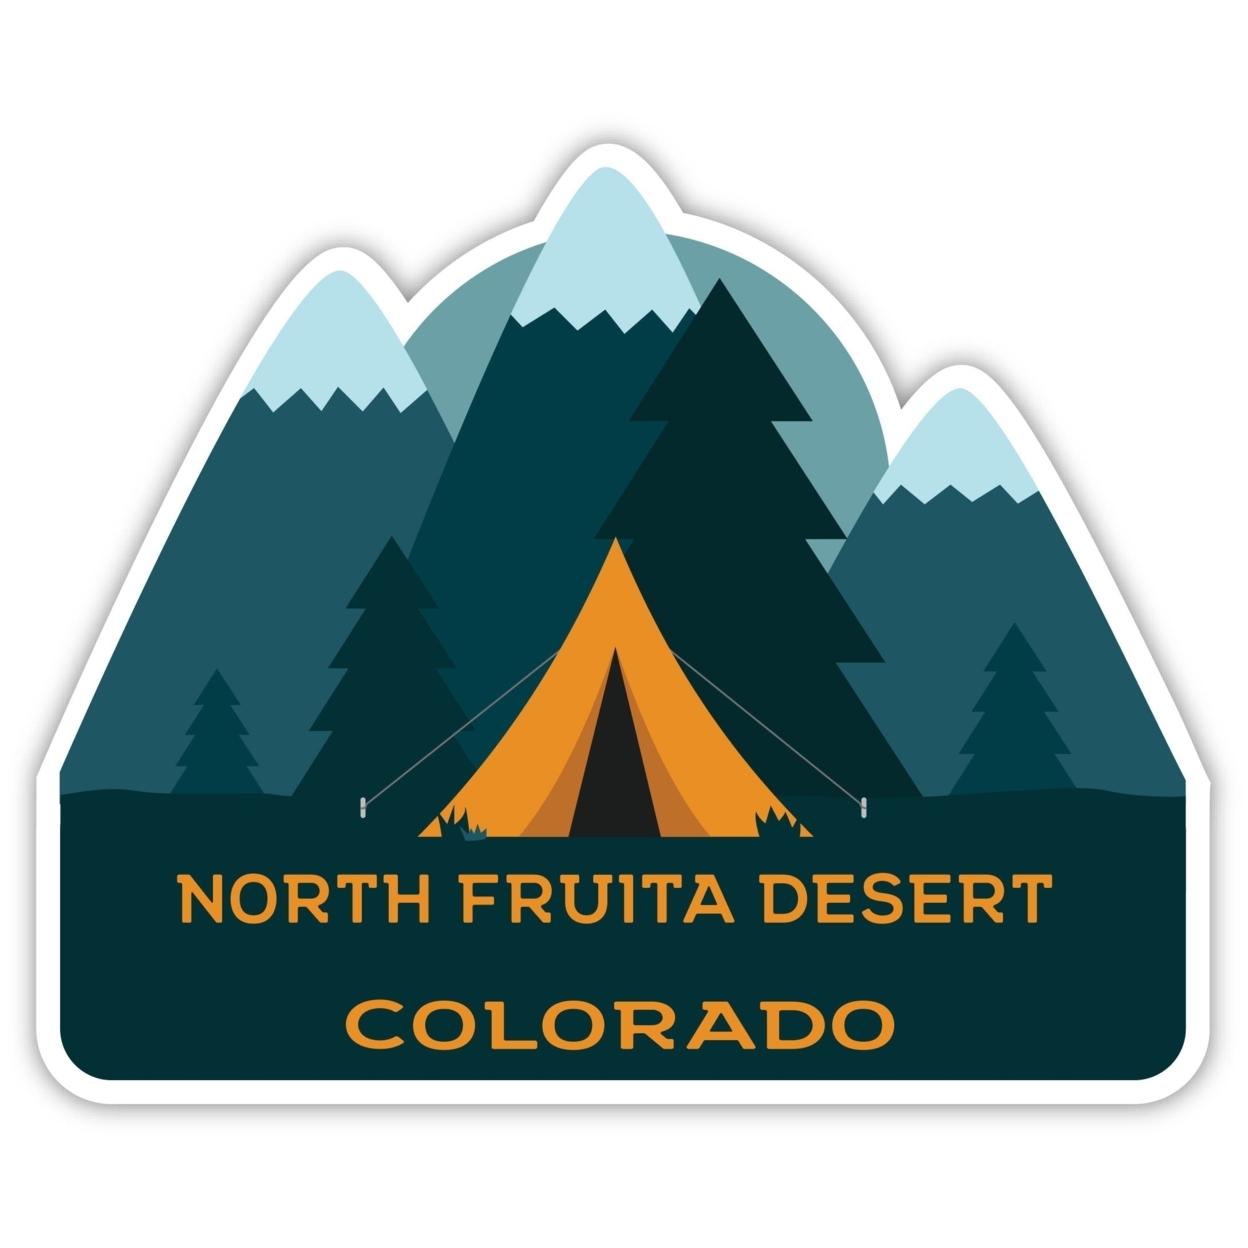 North Fruita Desert Colorado Souvenir Decorative Stickers (Choose Theme And Size) - Single Unit, 2-Inch, Tent